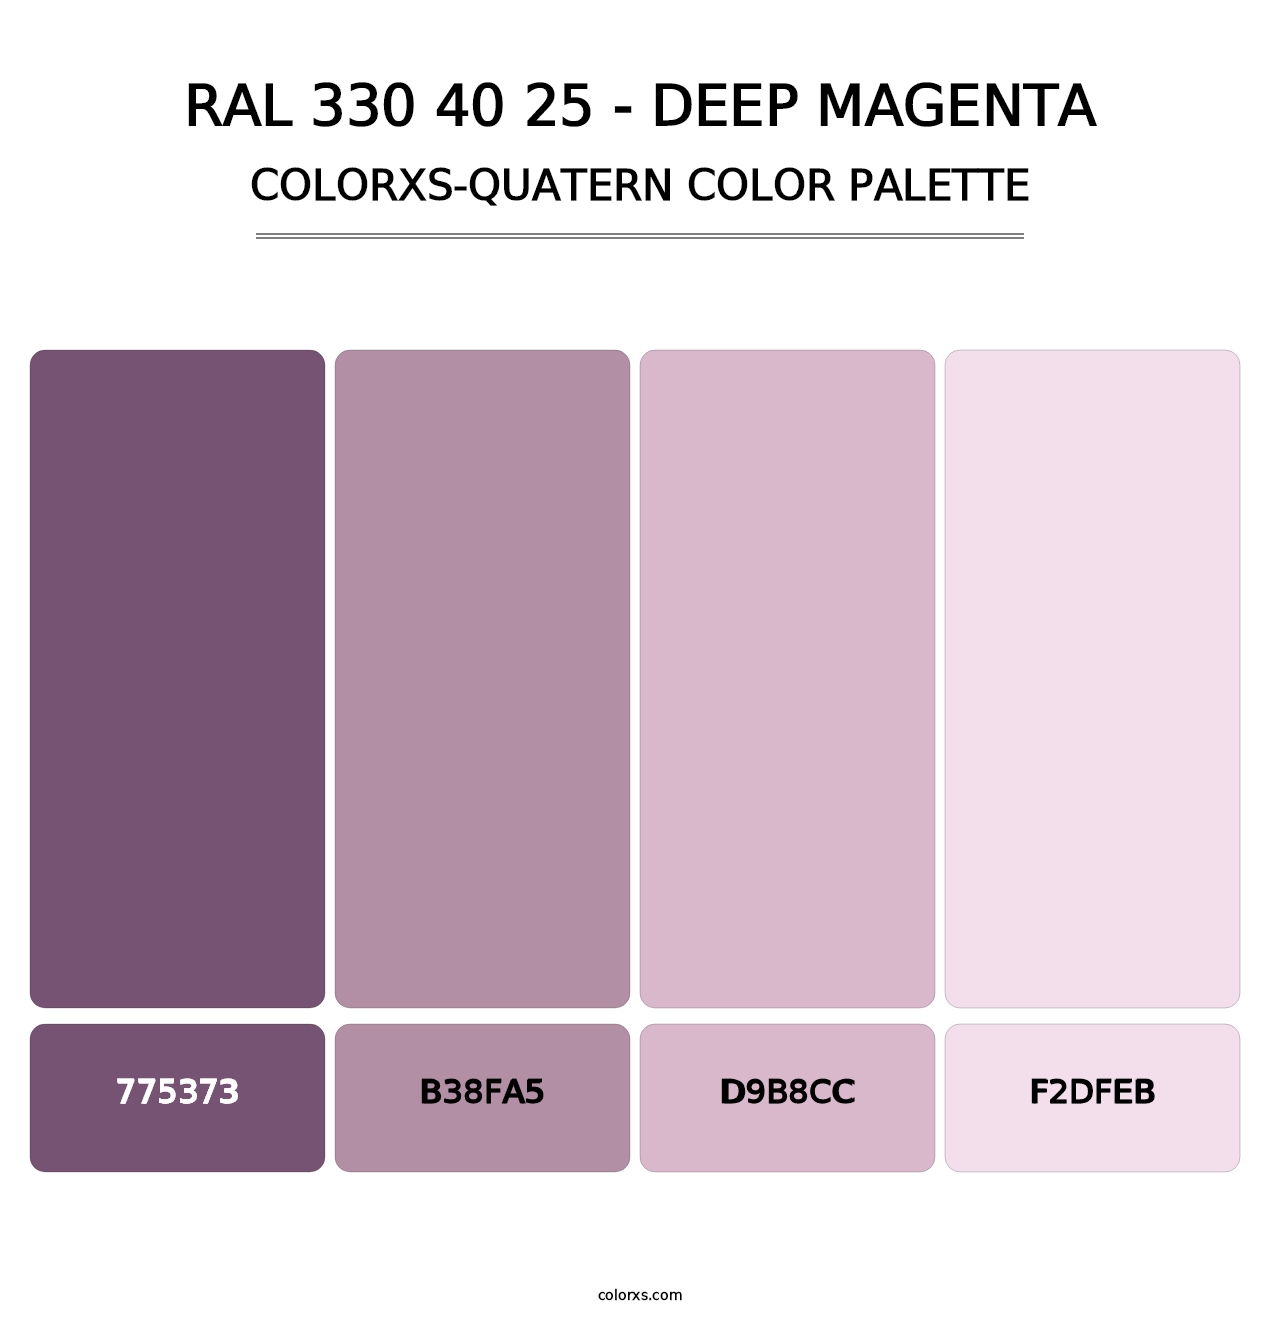 RAL 330 40 25 - Deep Magenta - Colorxs Quatern Palette